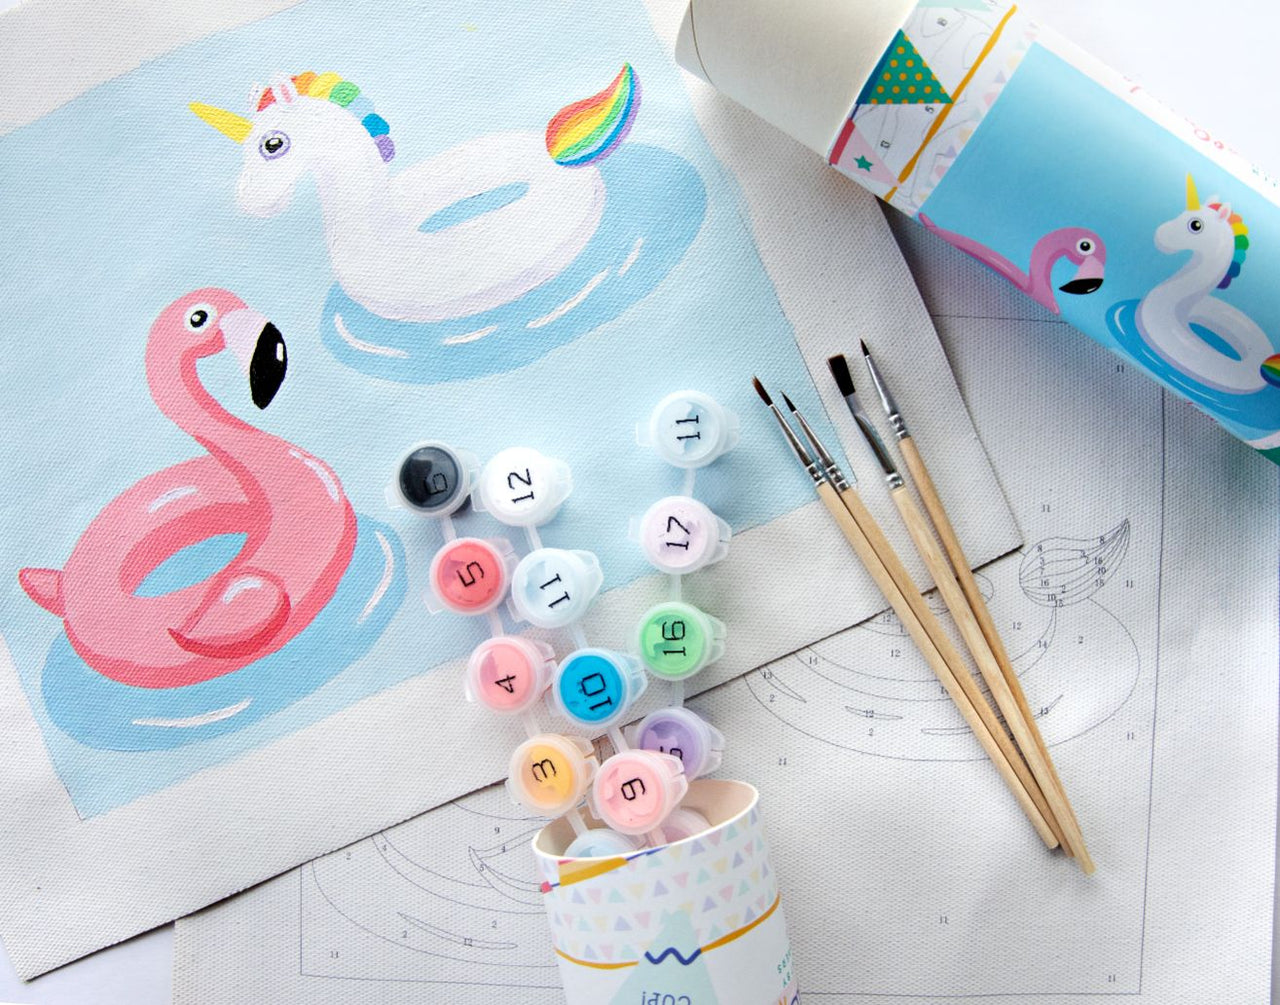 Pink Picasso Paint Kits – That Cute Little Shop